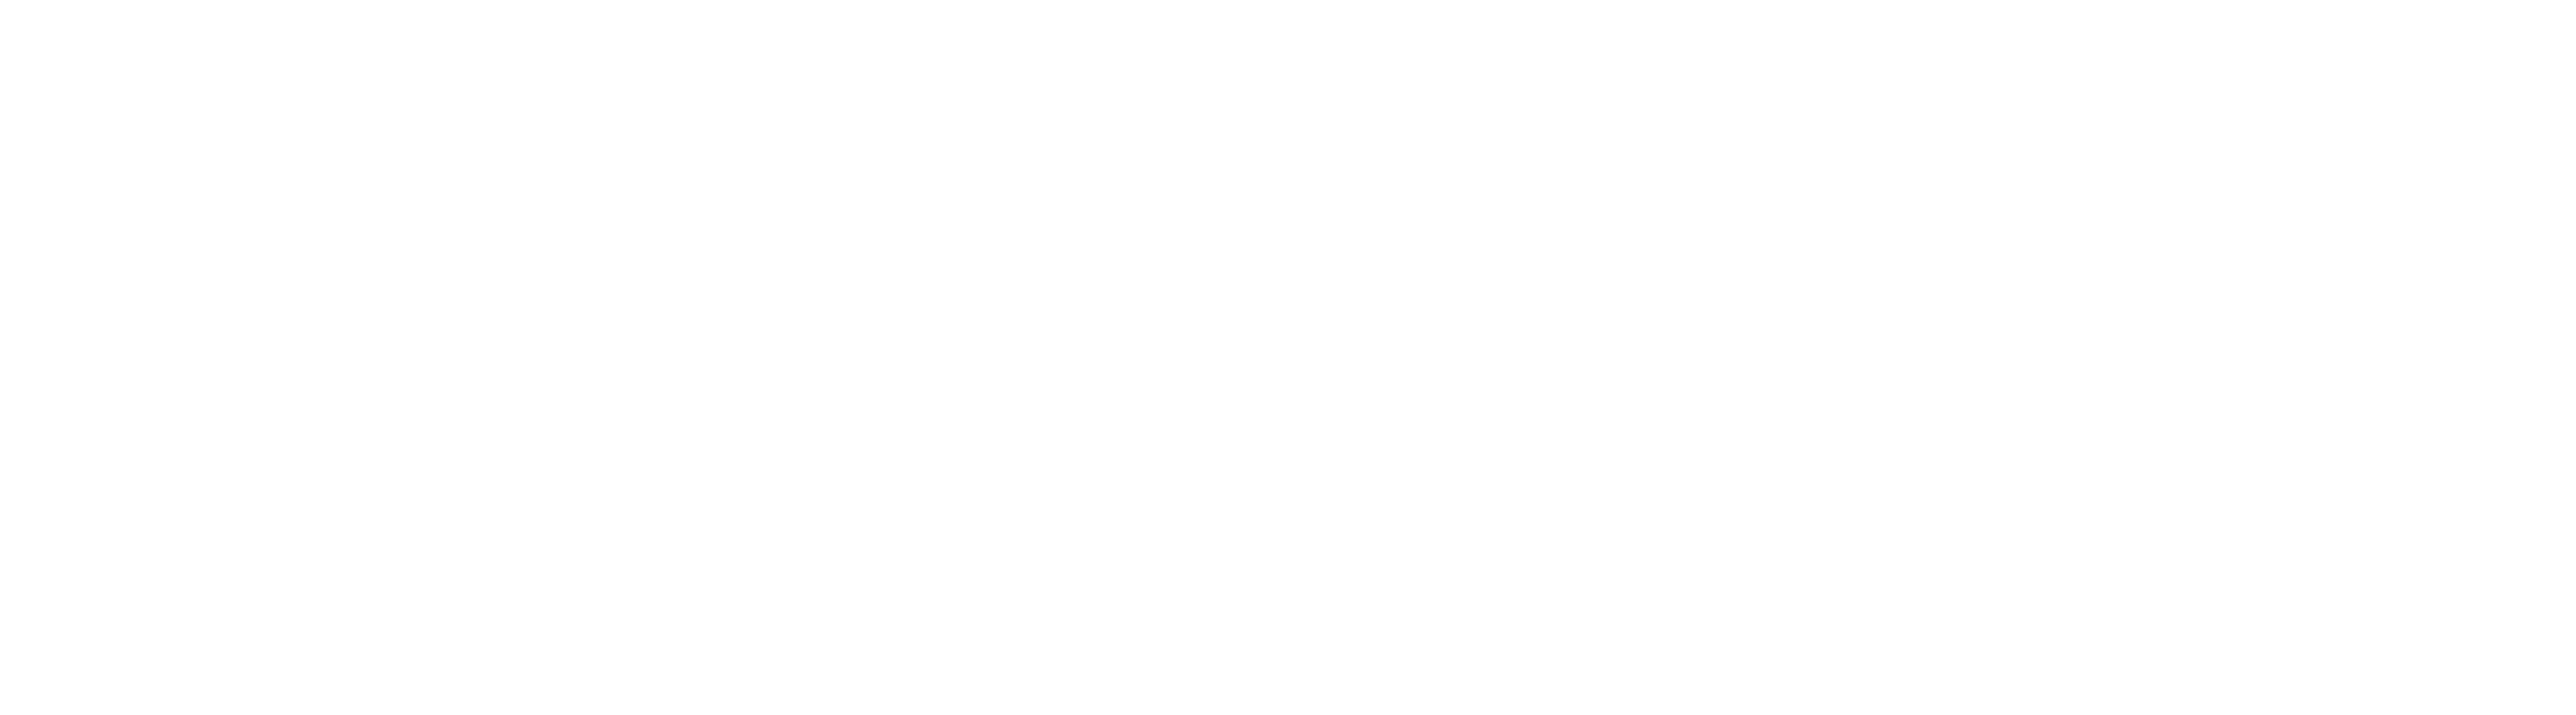 Razor-Motor-Logo-White